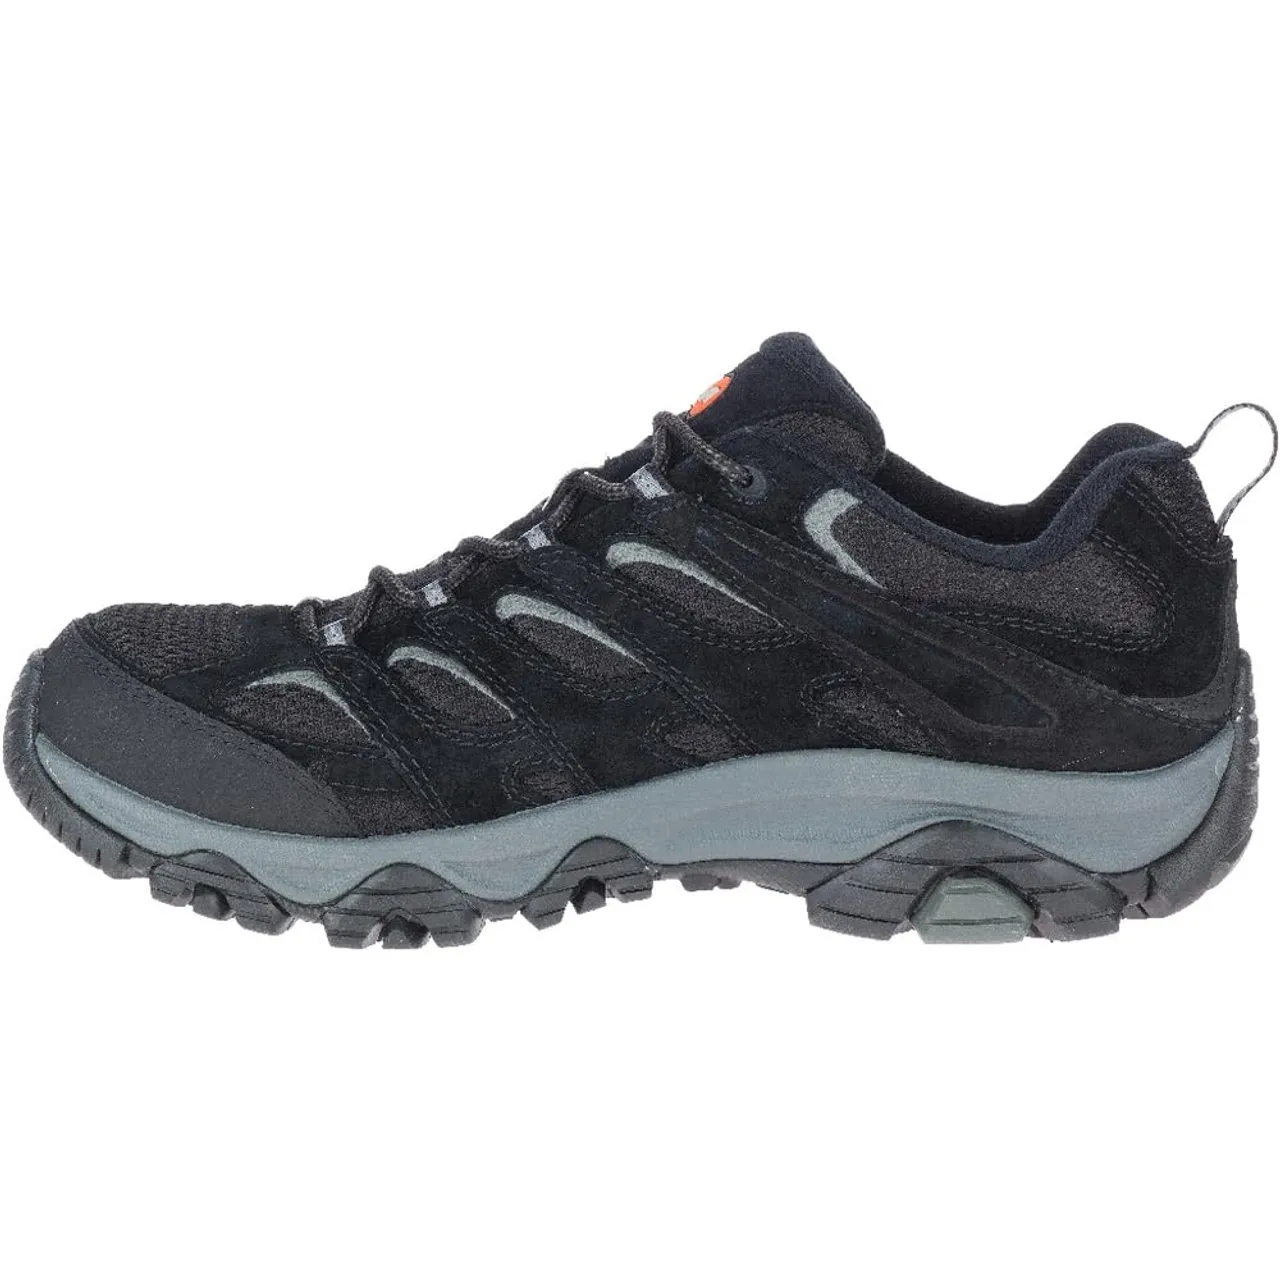 Merrell Men's Moab 3 GTX Hiking Shoe